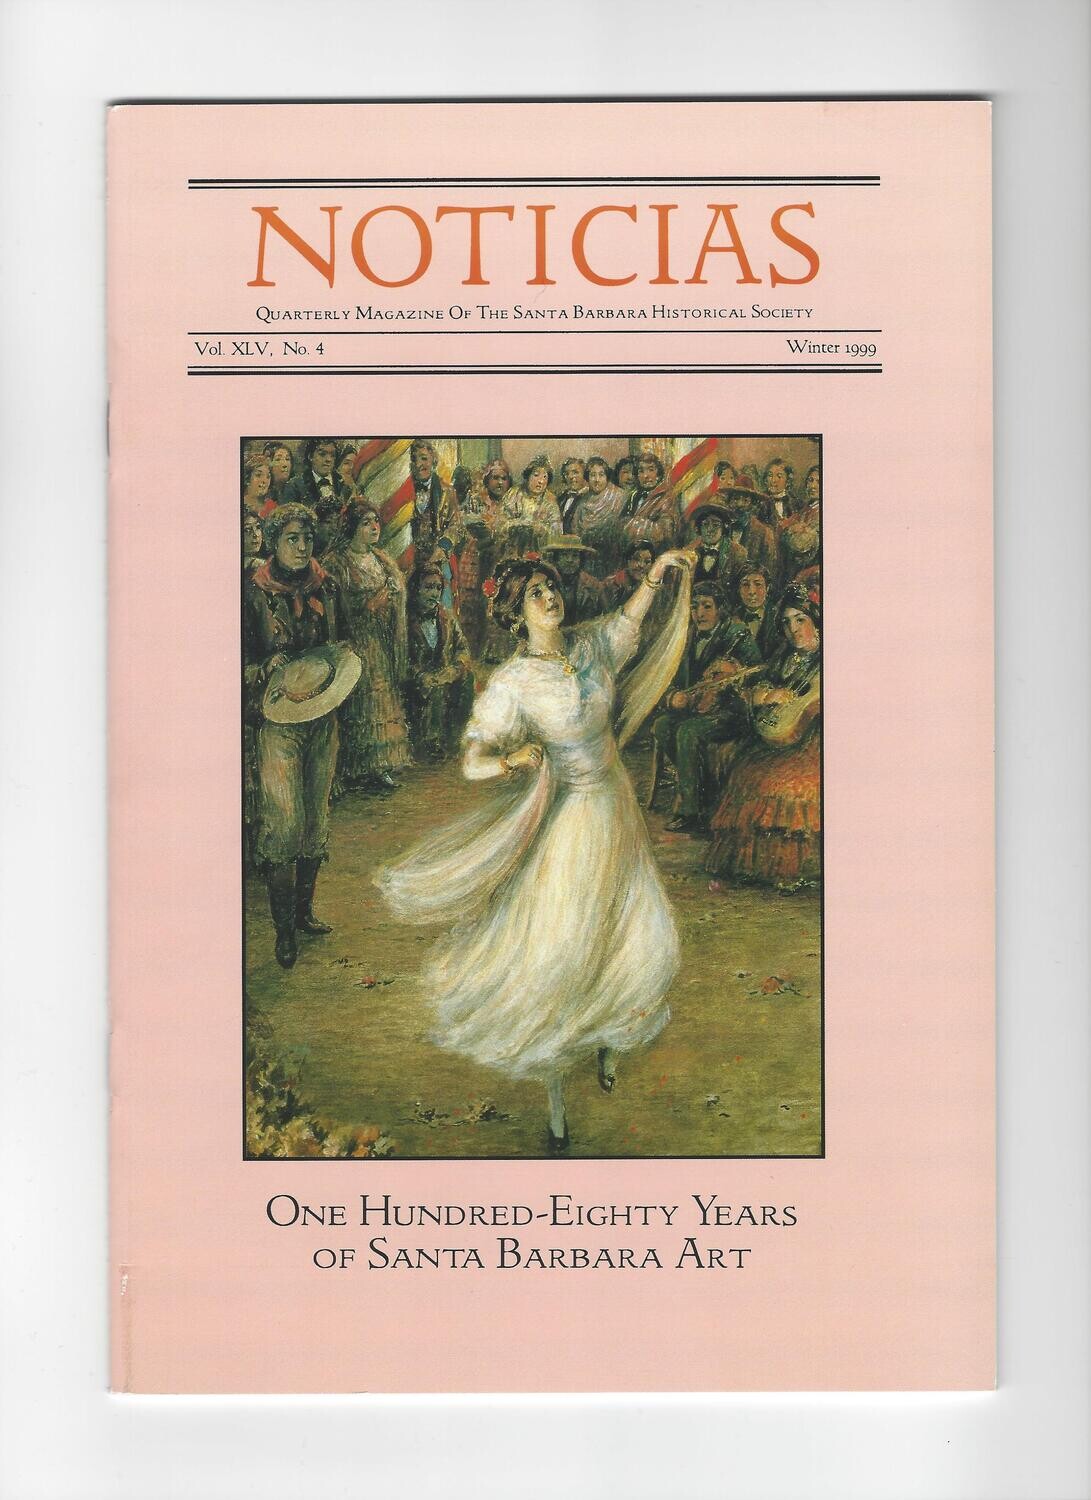 One Hundred-Eighty Years of Santa Barbara Art (Noticias Vol. XLV, No. 4)